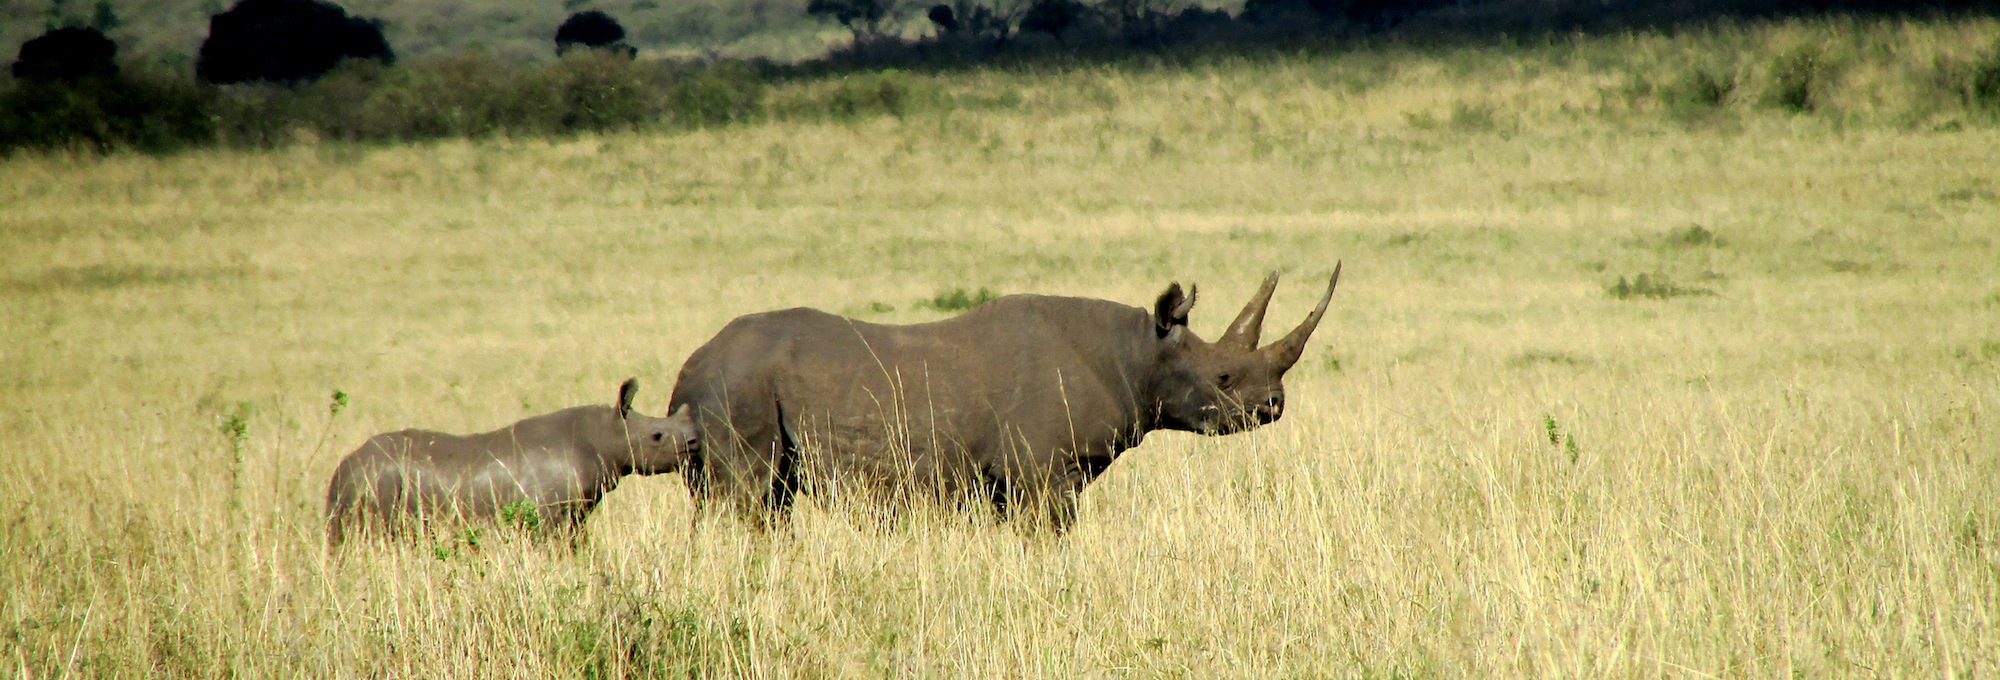 ...the rhino family across the vast plains...